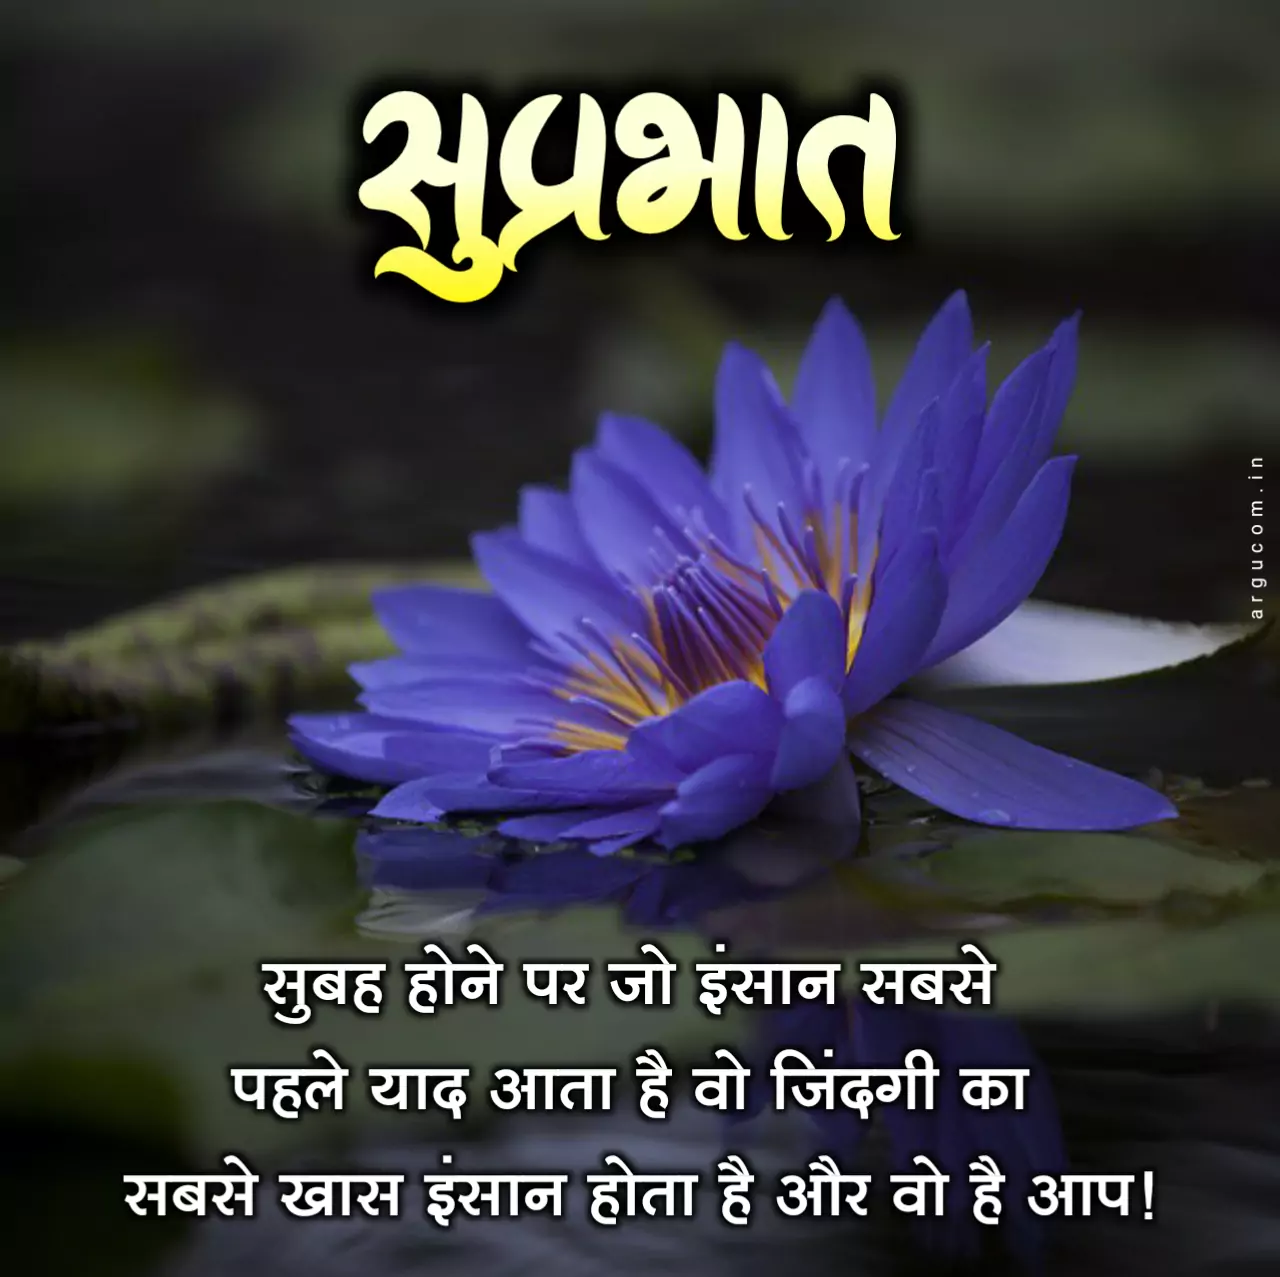 Best good morning quotes in hindi , गुड मॉर्निंग कोट्स हिंदी